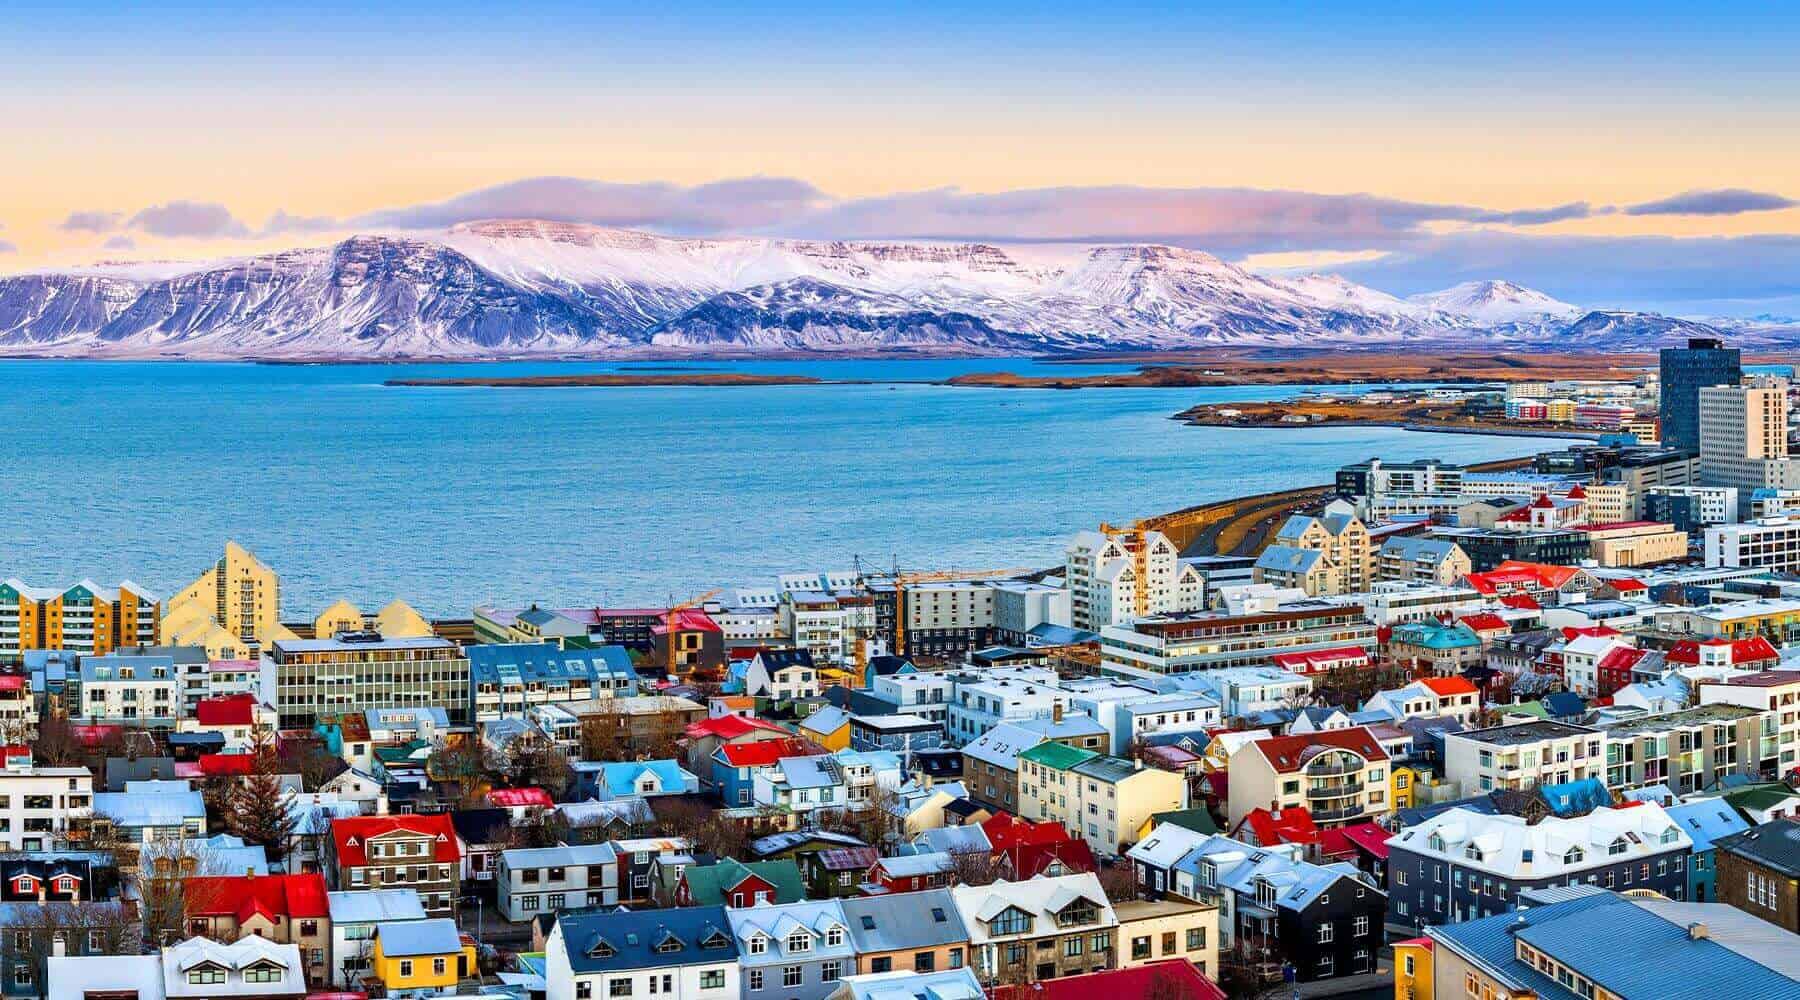 ICELAND